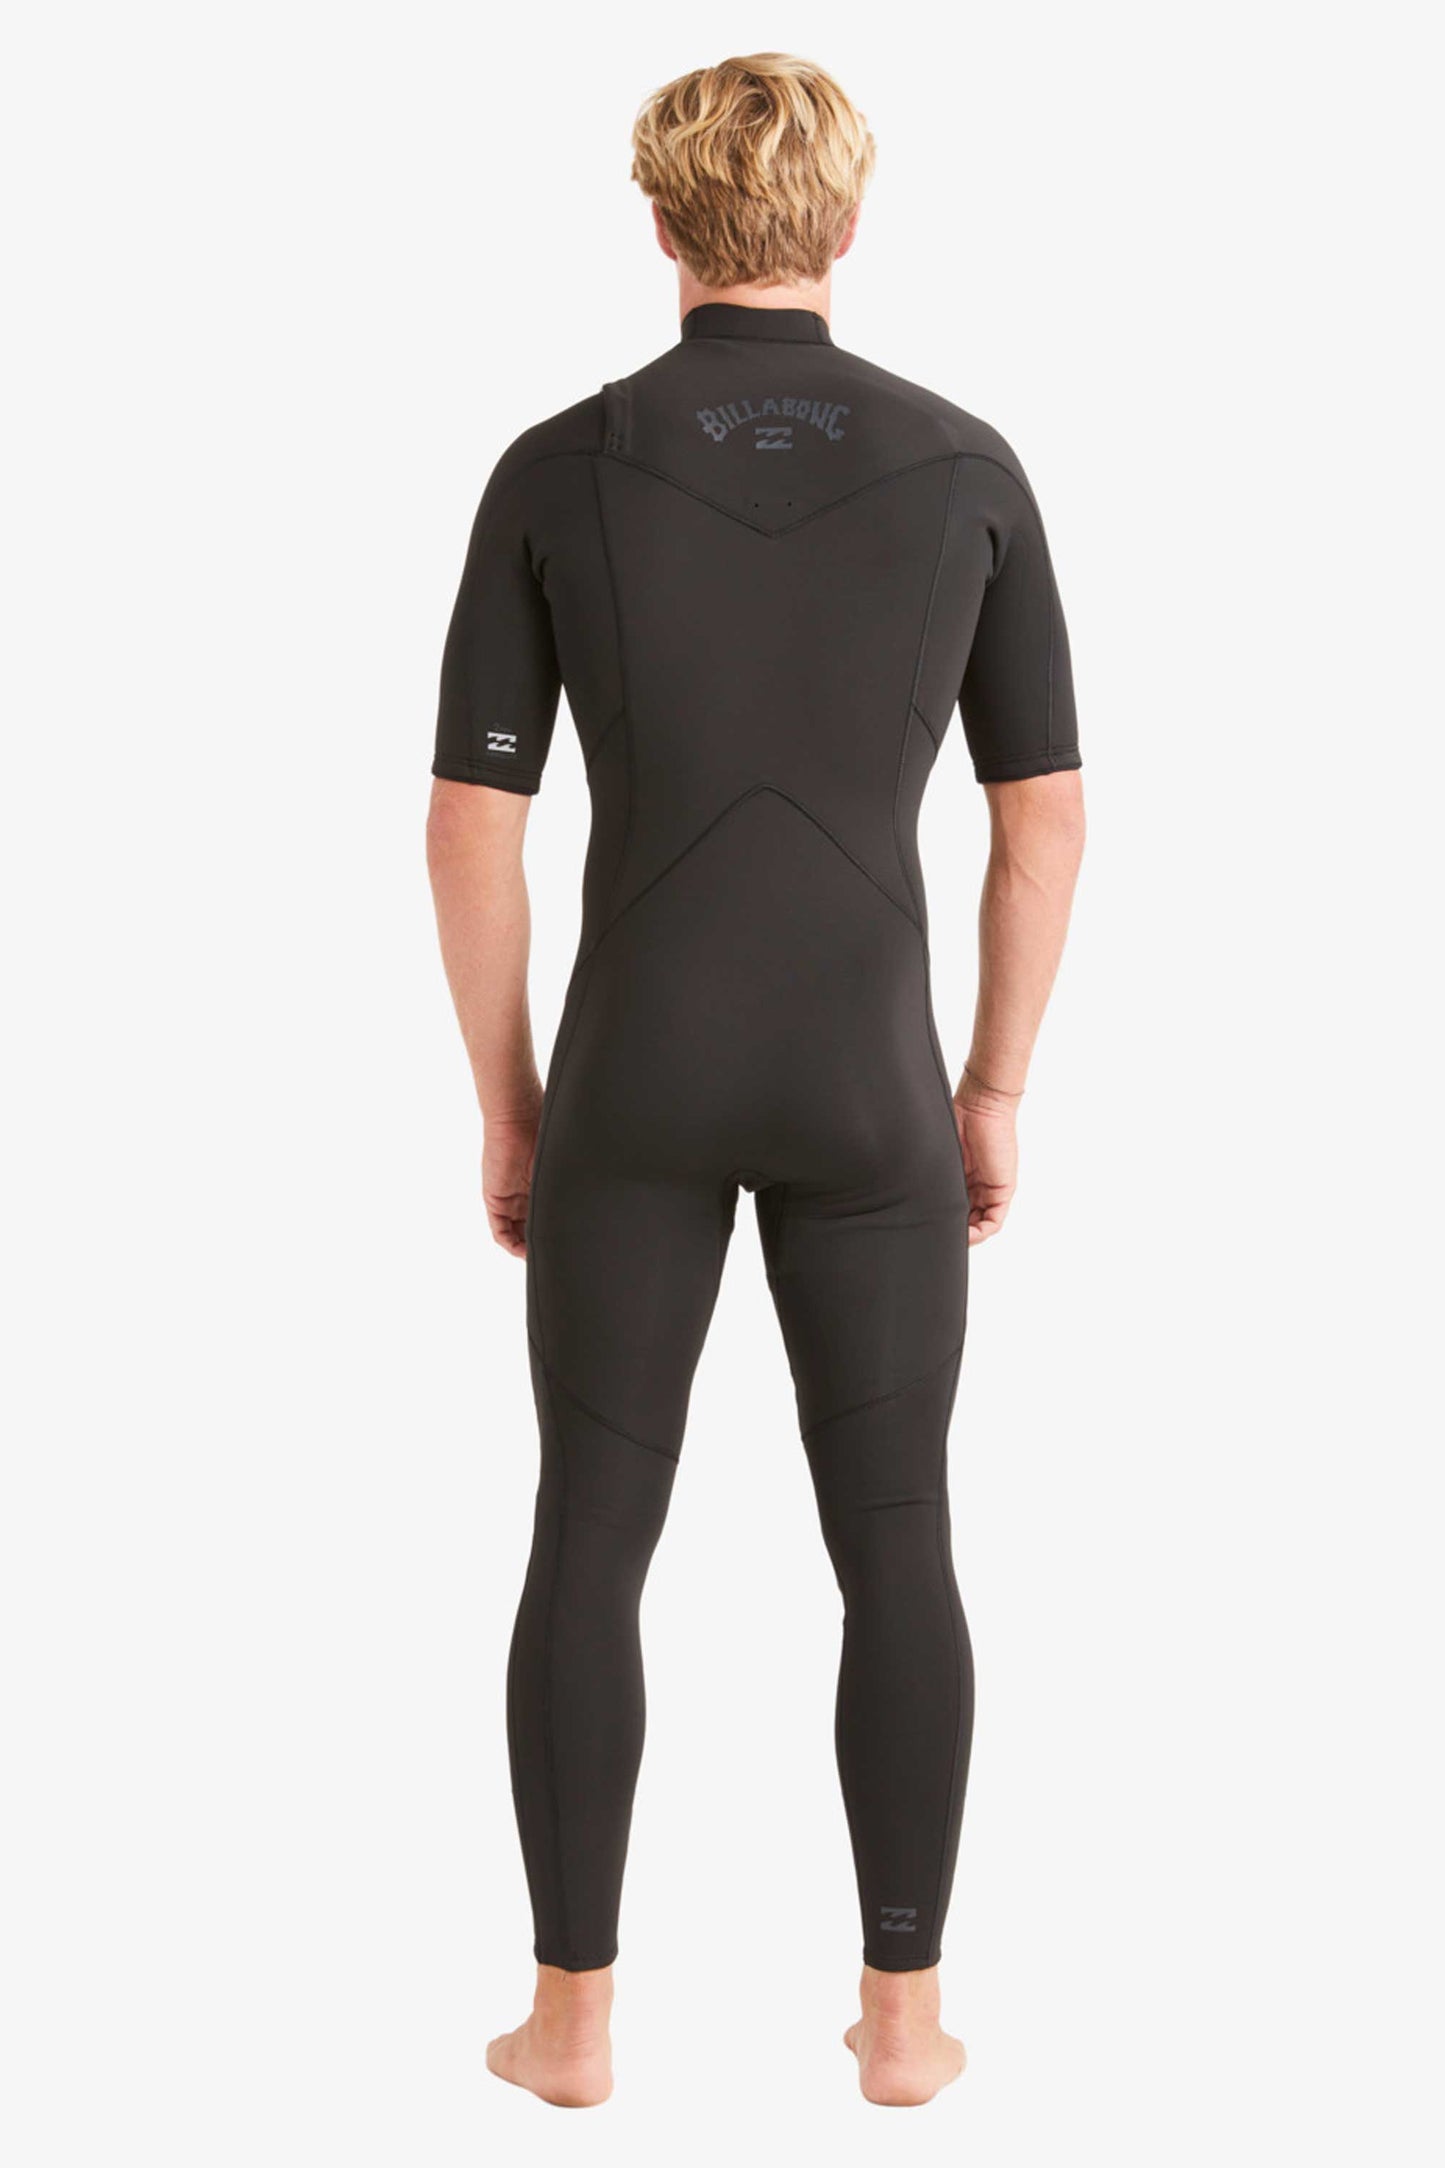 Pukas-Surf-Shop-Billabong-wetsuit-2-2-absolute-man-black